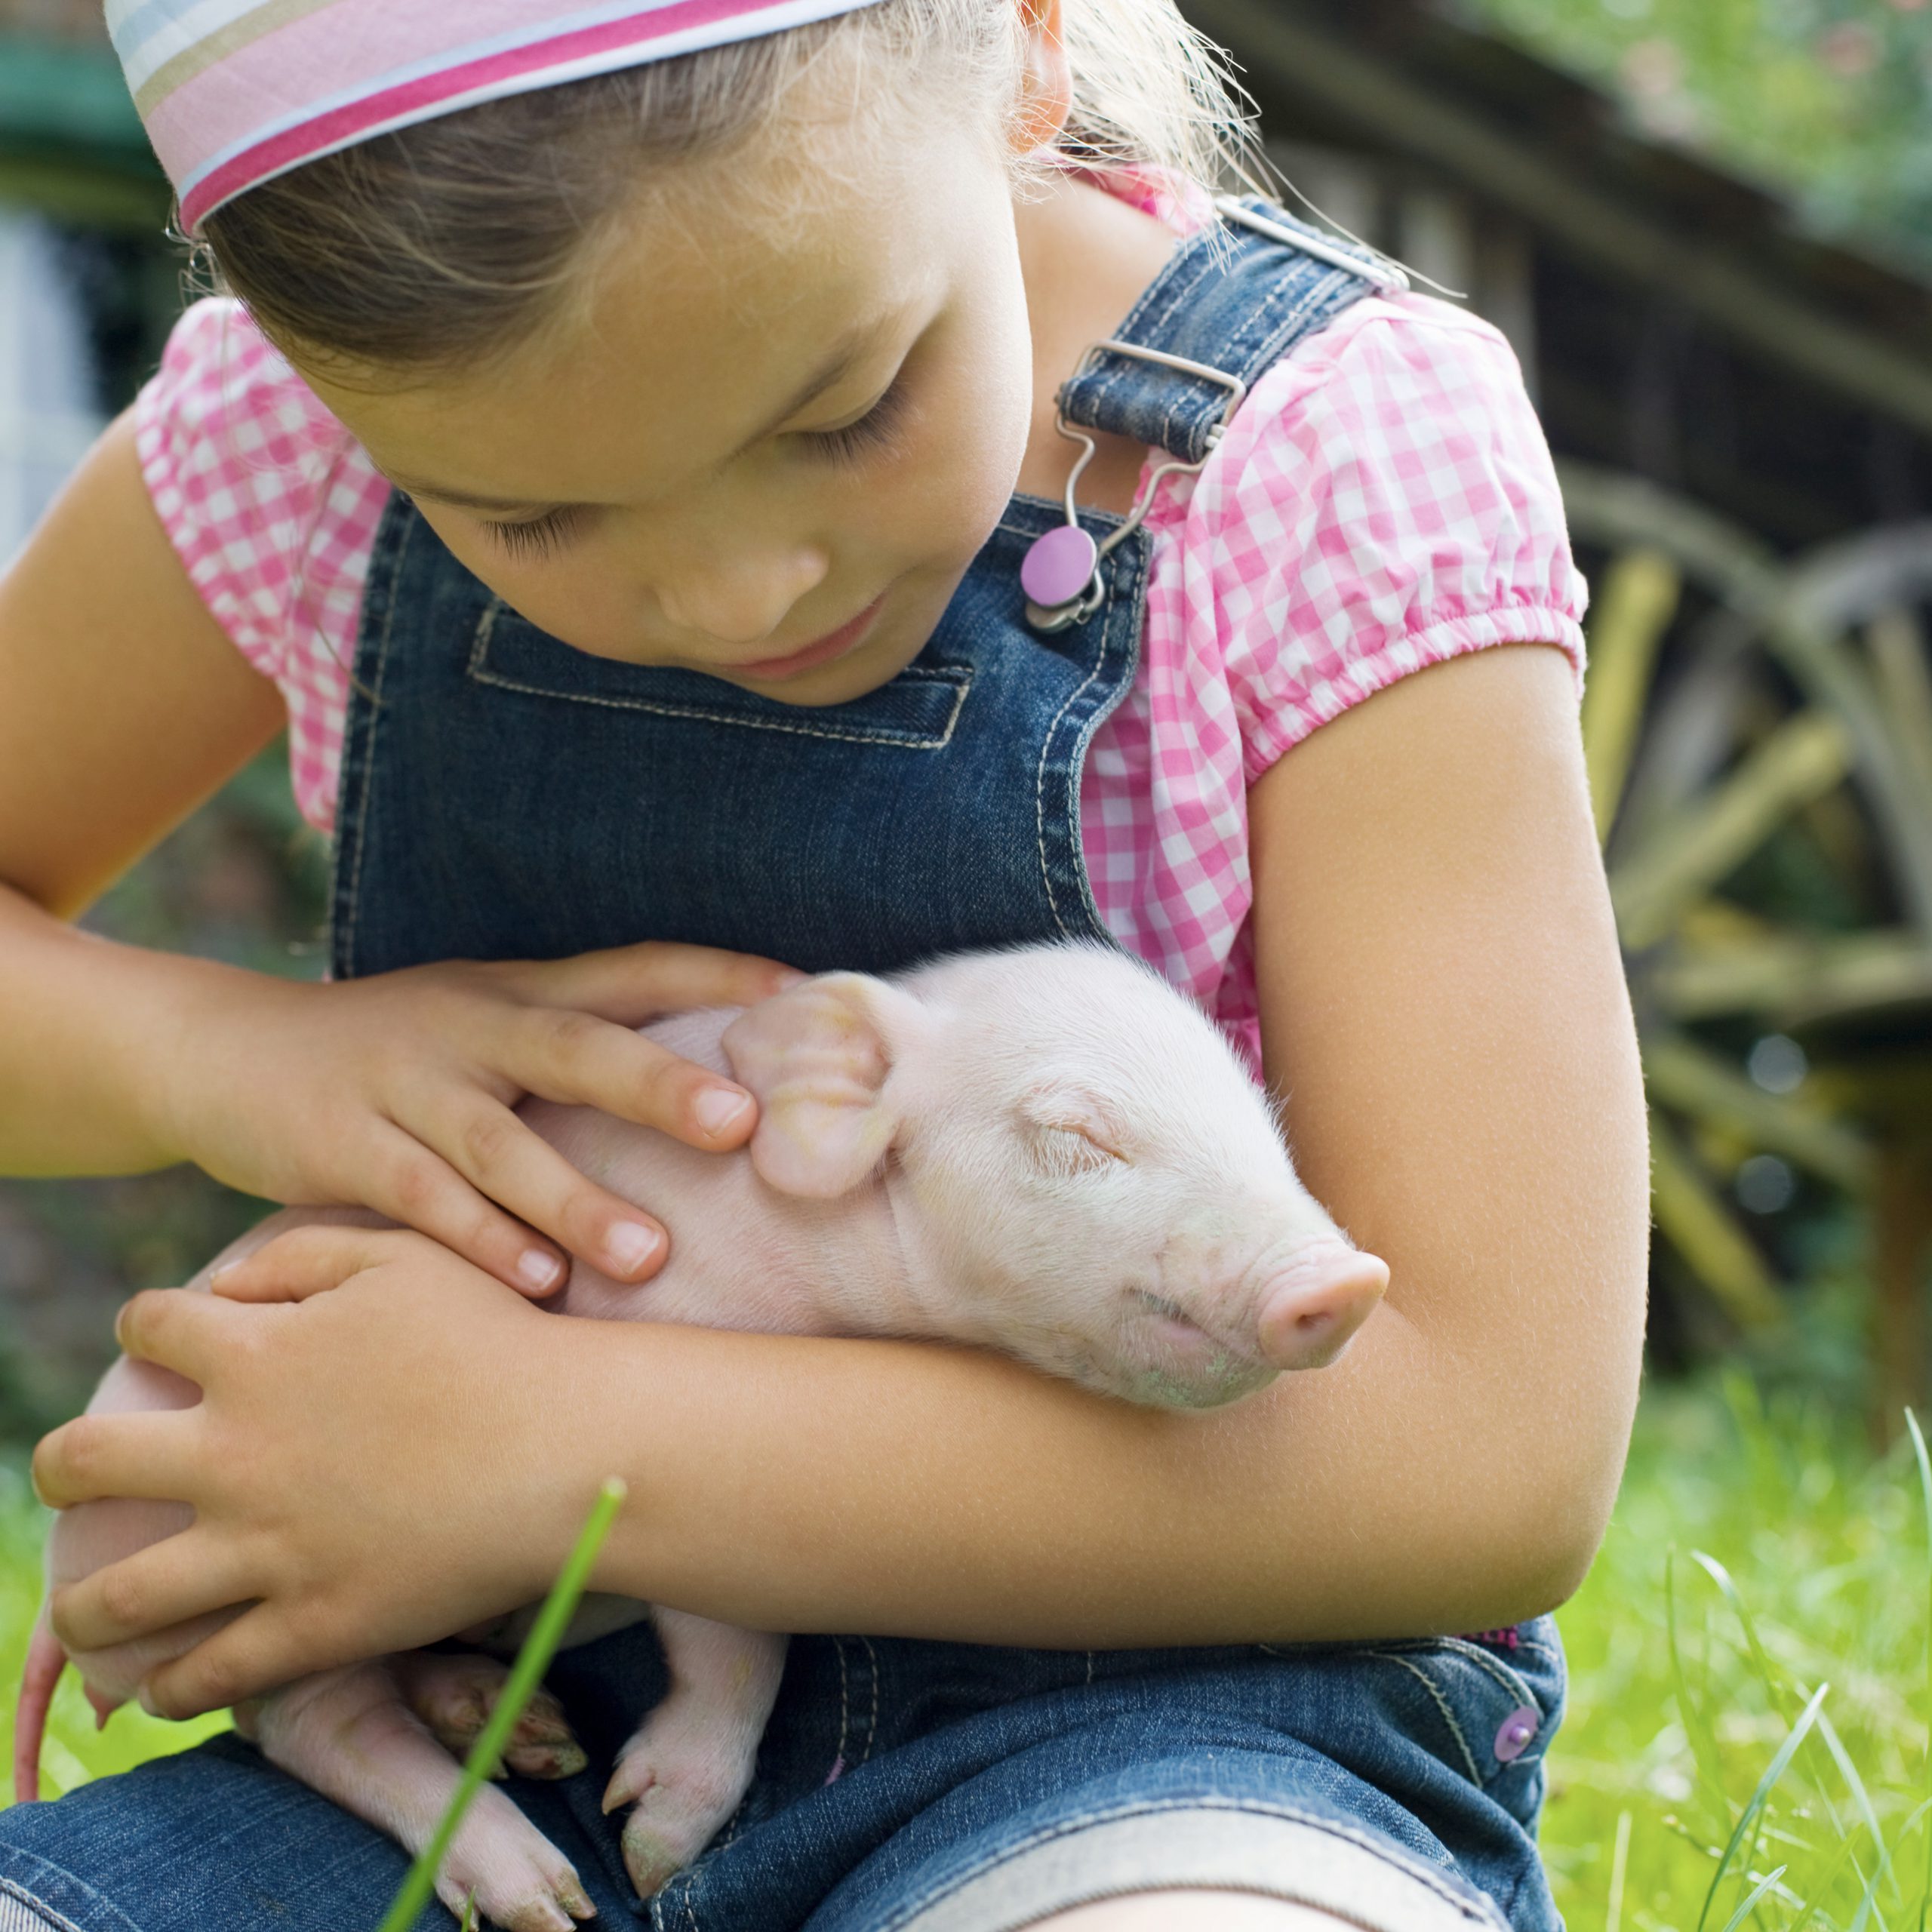 A girl holding a piglet